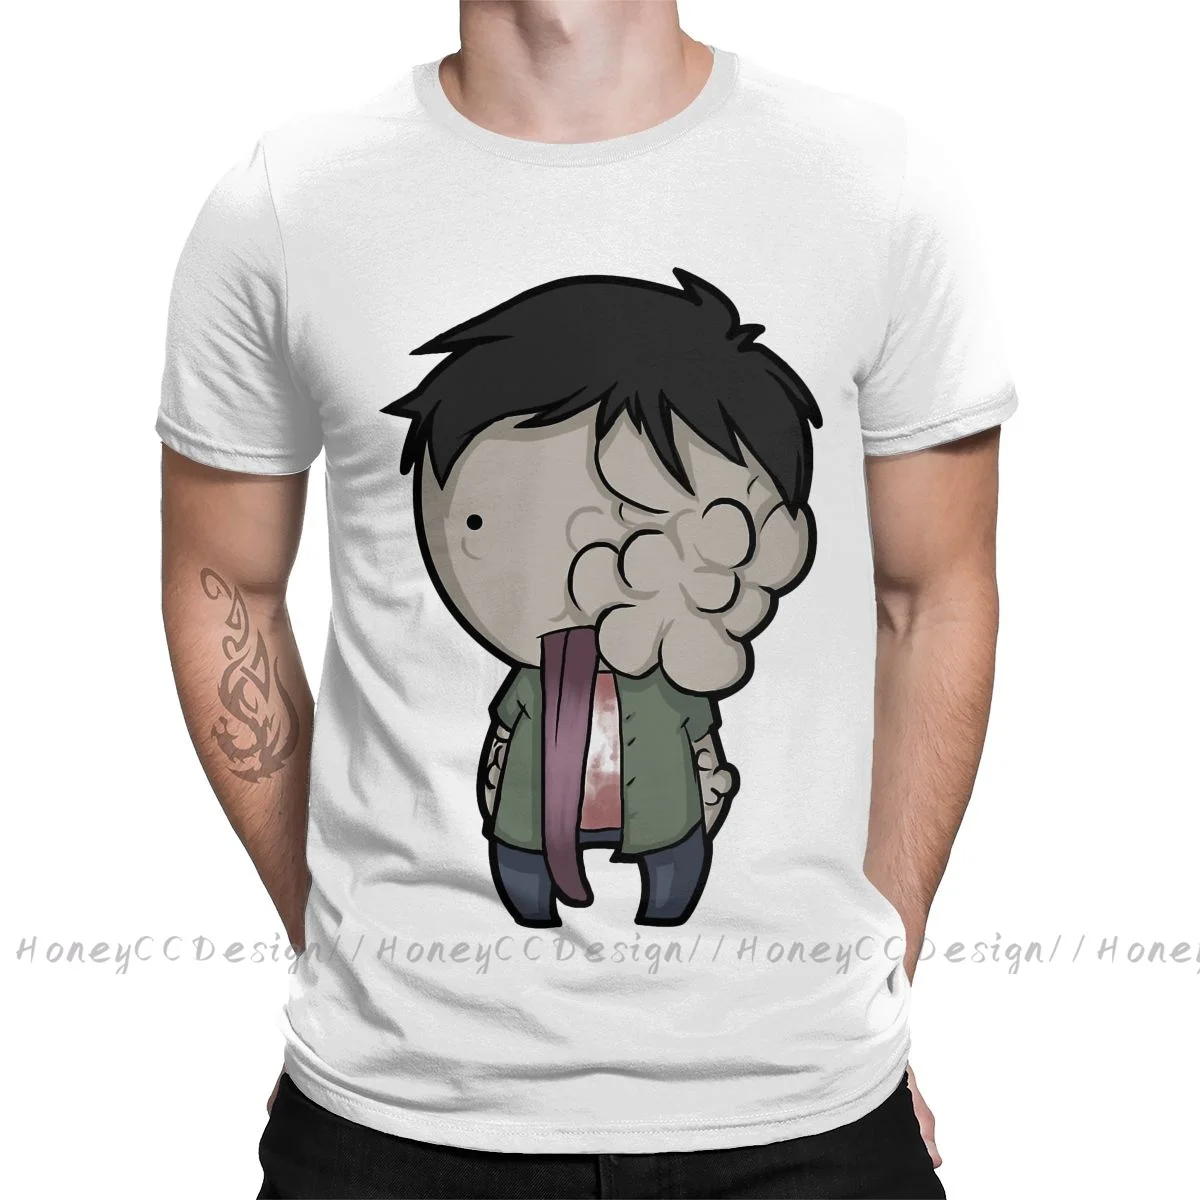 Left 4 Dead Print Cotton T-Shirt Camiseta Hombre Smoker For Men Fashion Streetwear Shirt Gift